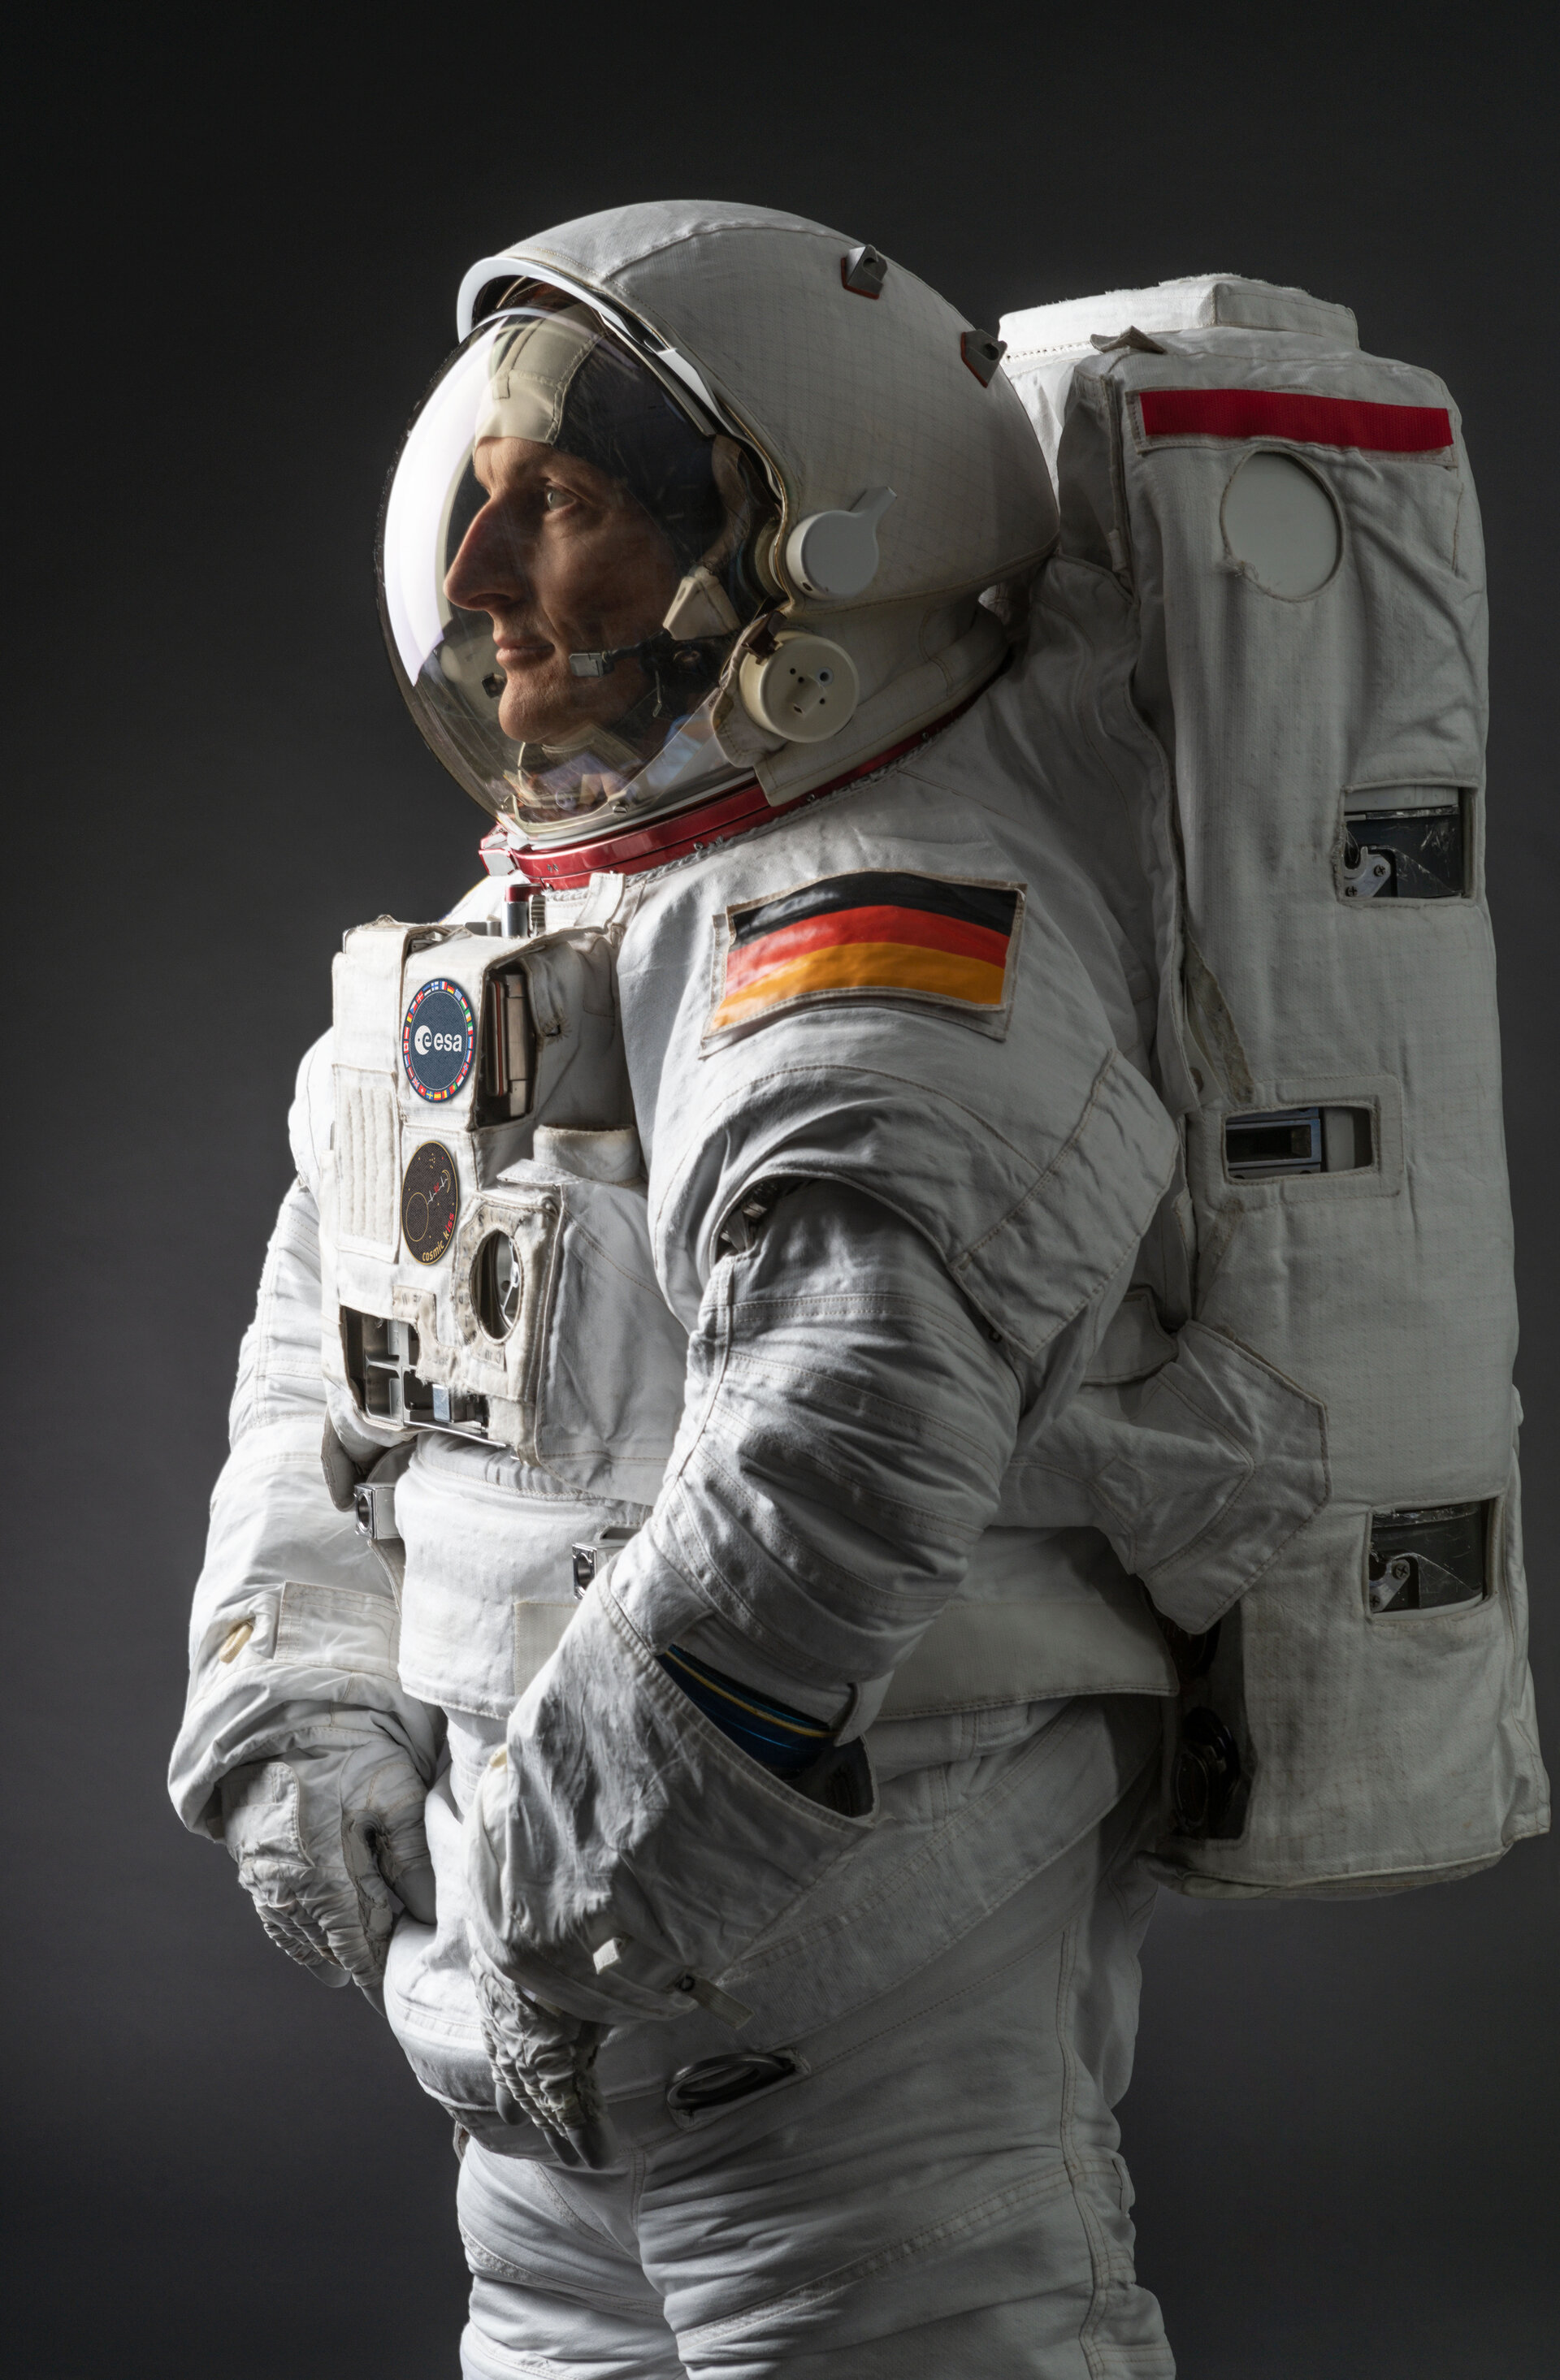 Official portrait of Matthias Maurer wearing NASA's EMU spacesuit